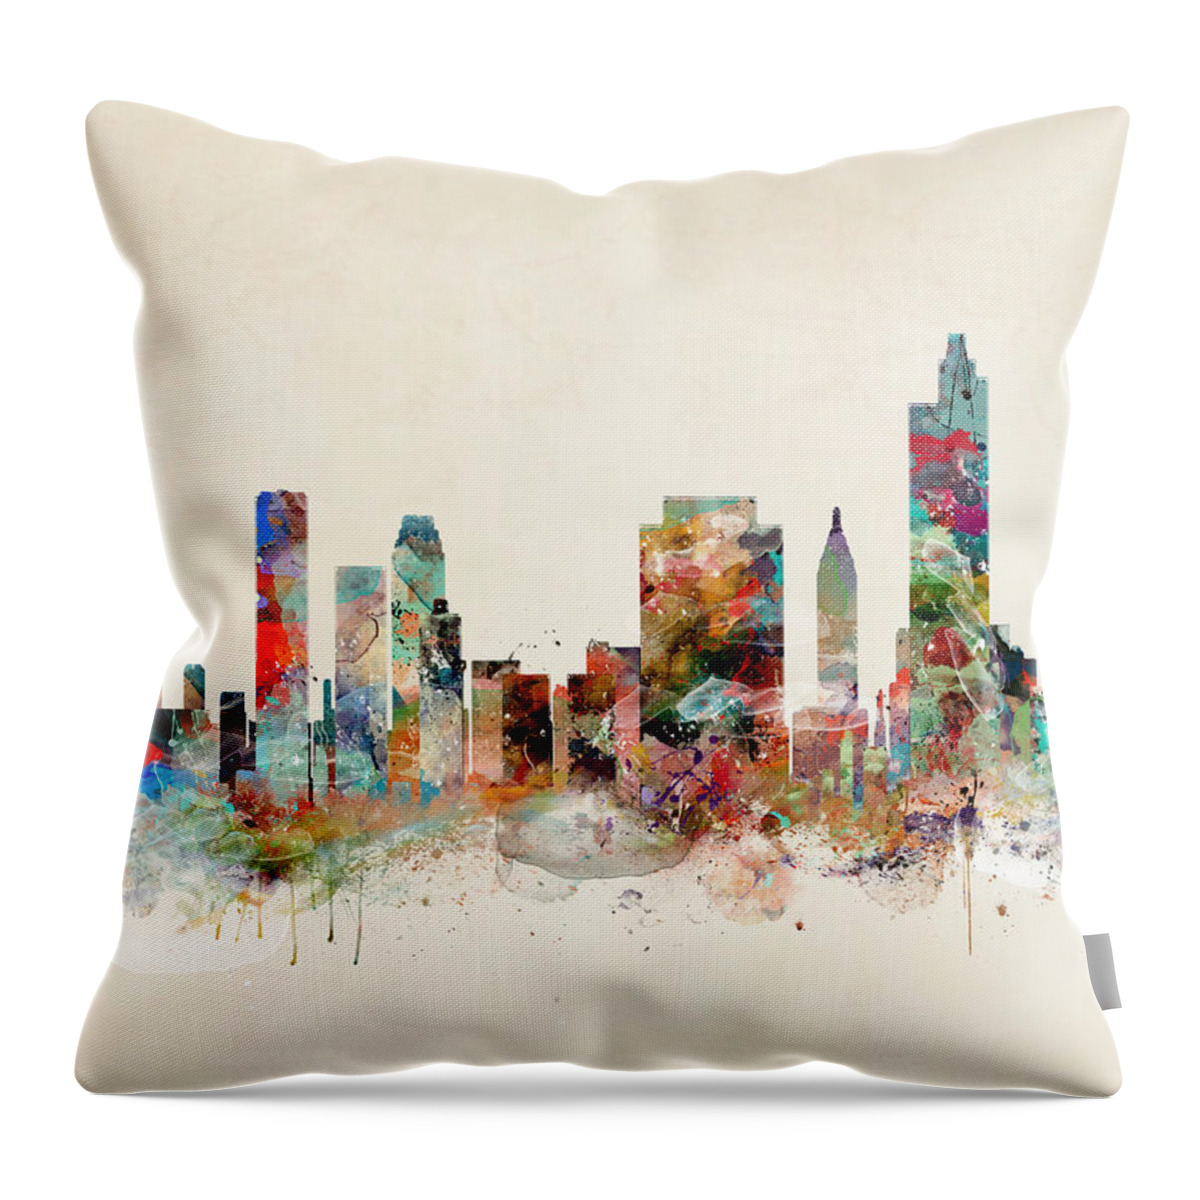 Tulsa City Throw Pillow featuring the painting Tulsa City Skyline by Bri Buckley